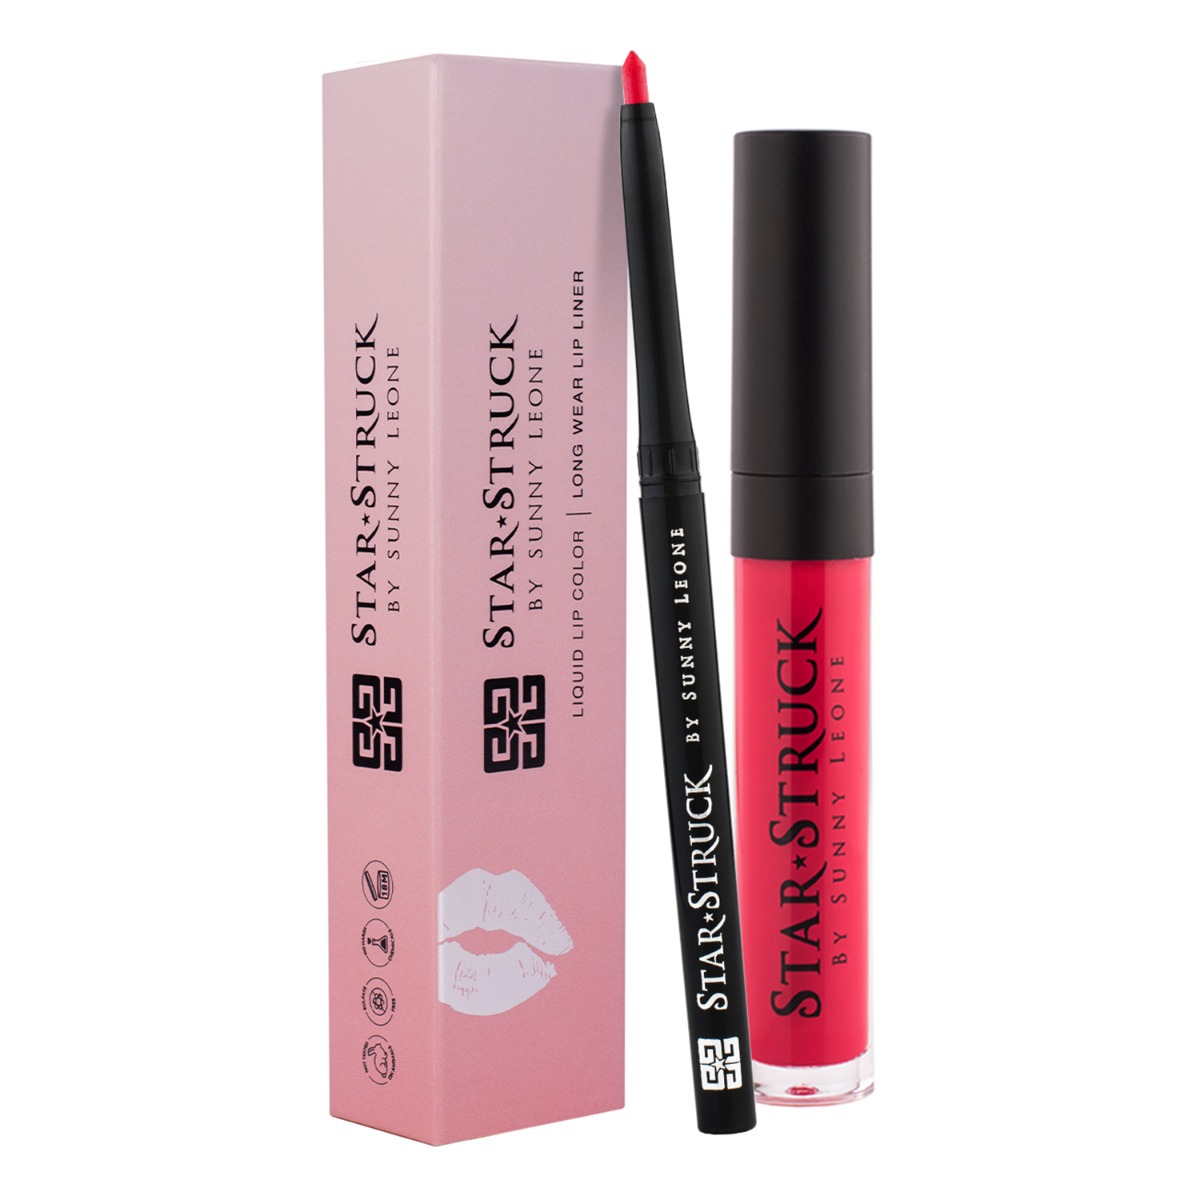 Star Struck by Sunny Leone Wild Cherry Lip Kit - Lip Gloss, 5.5ml + Lip Liner, 0.25gm Combo